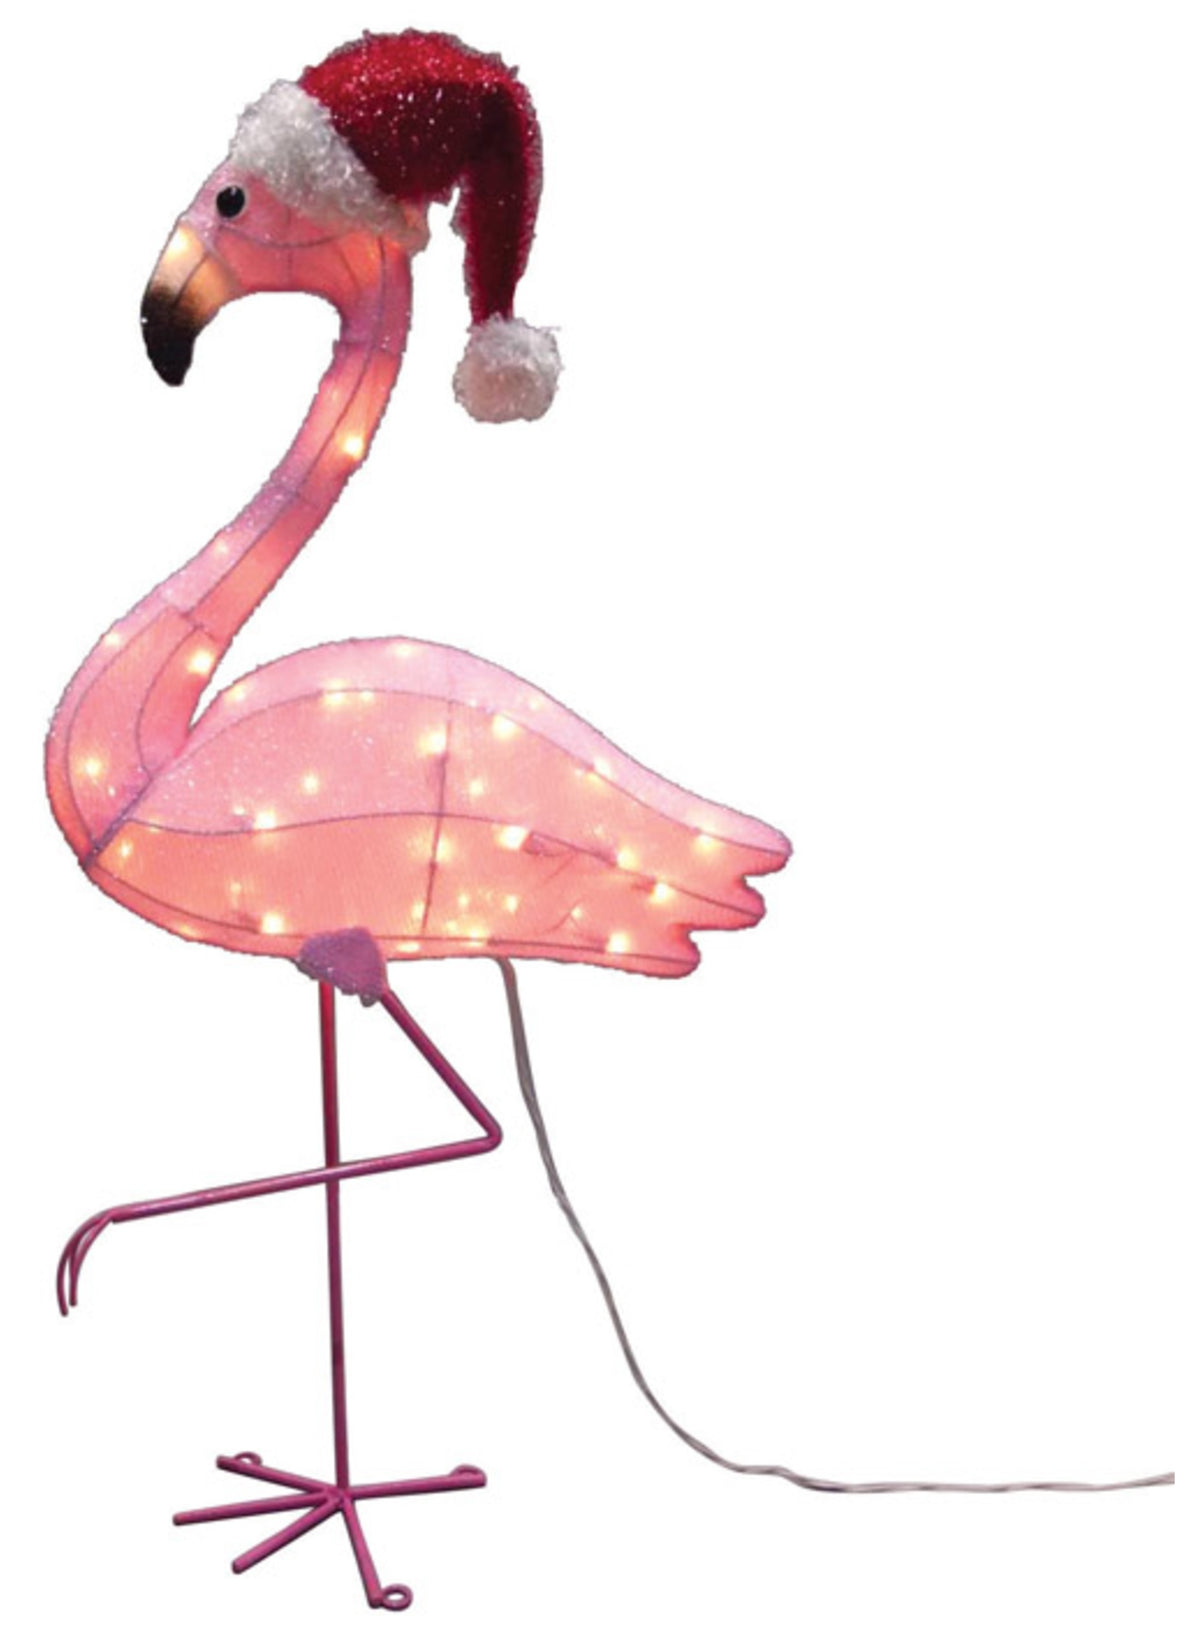 Celebrations 50333-71 Flamingo With Santa Hat Christmas Yard Decor, Pink